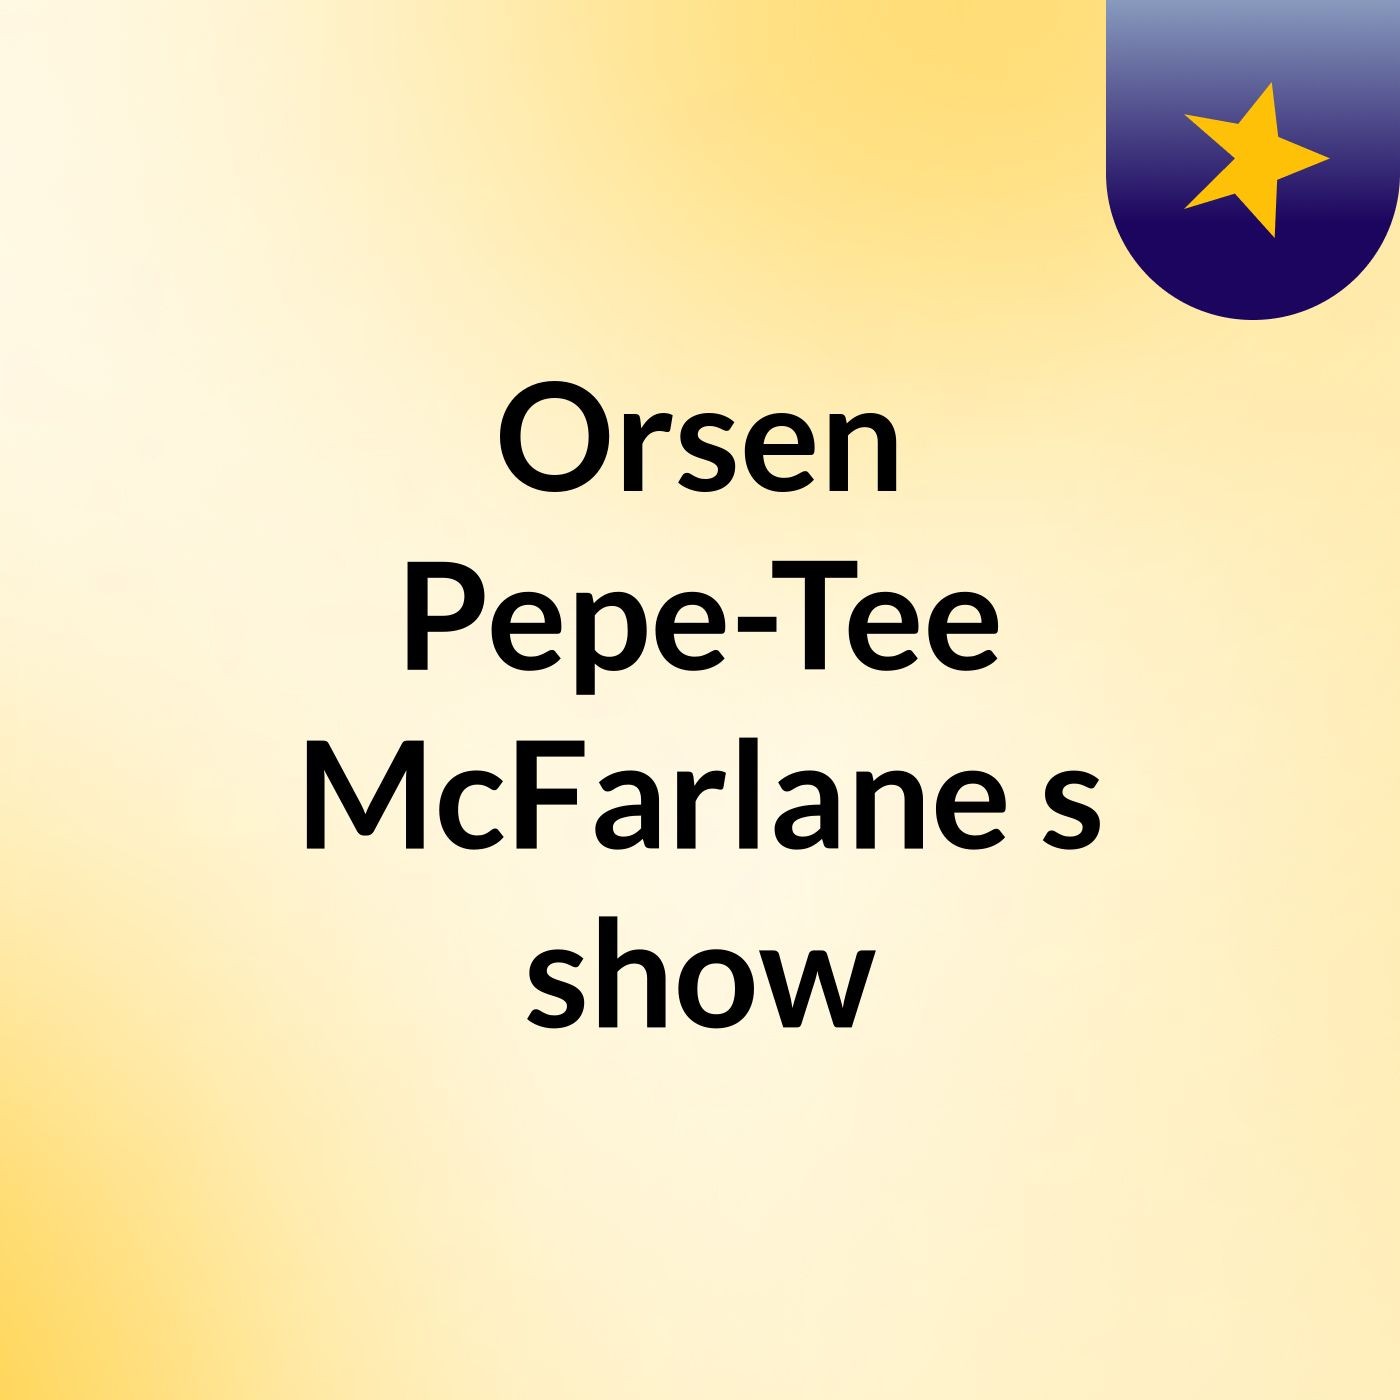 Orsen Pepe-Tee McFarlane's show